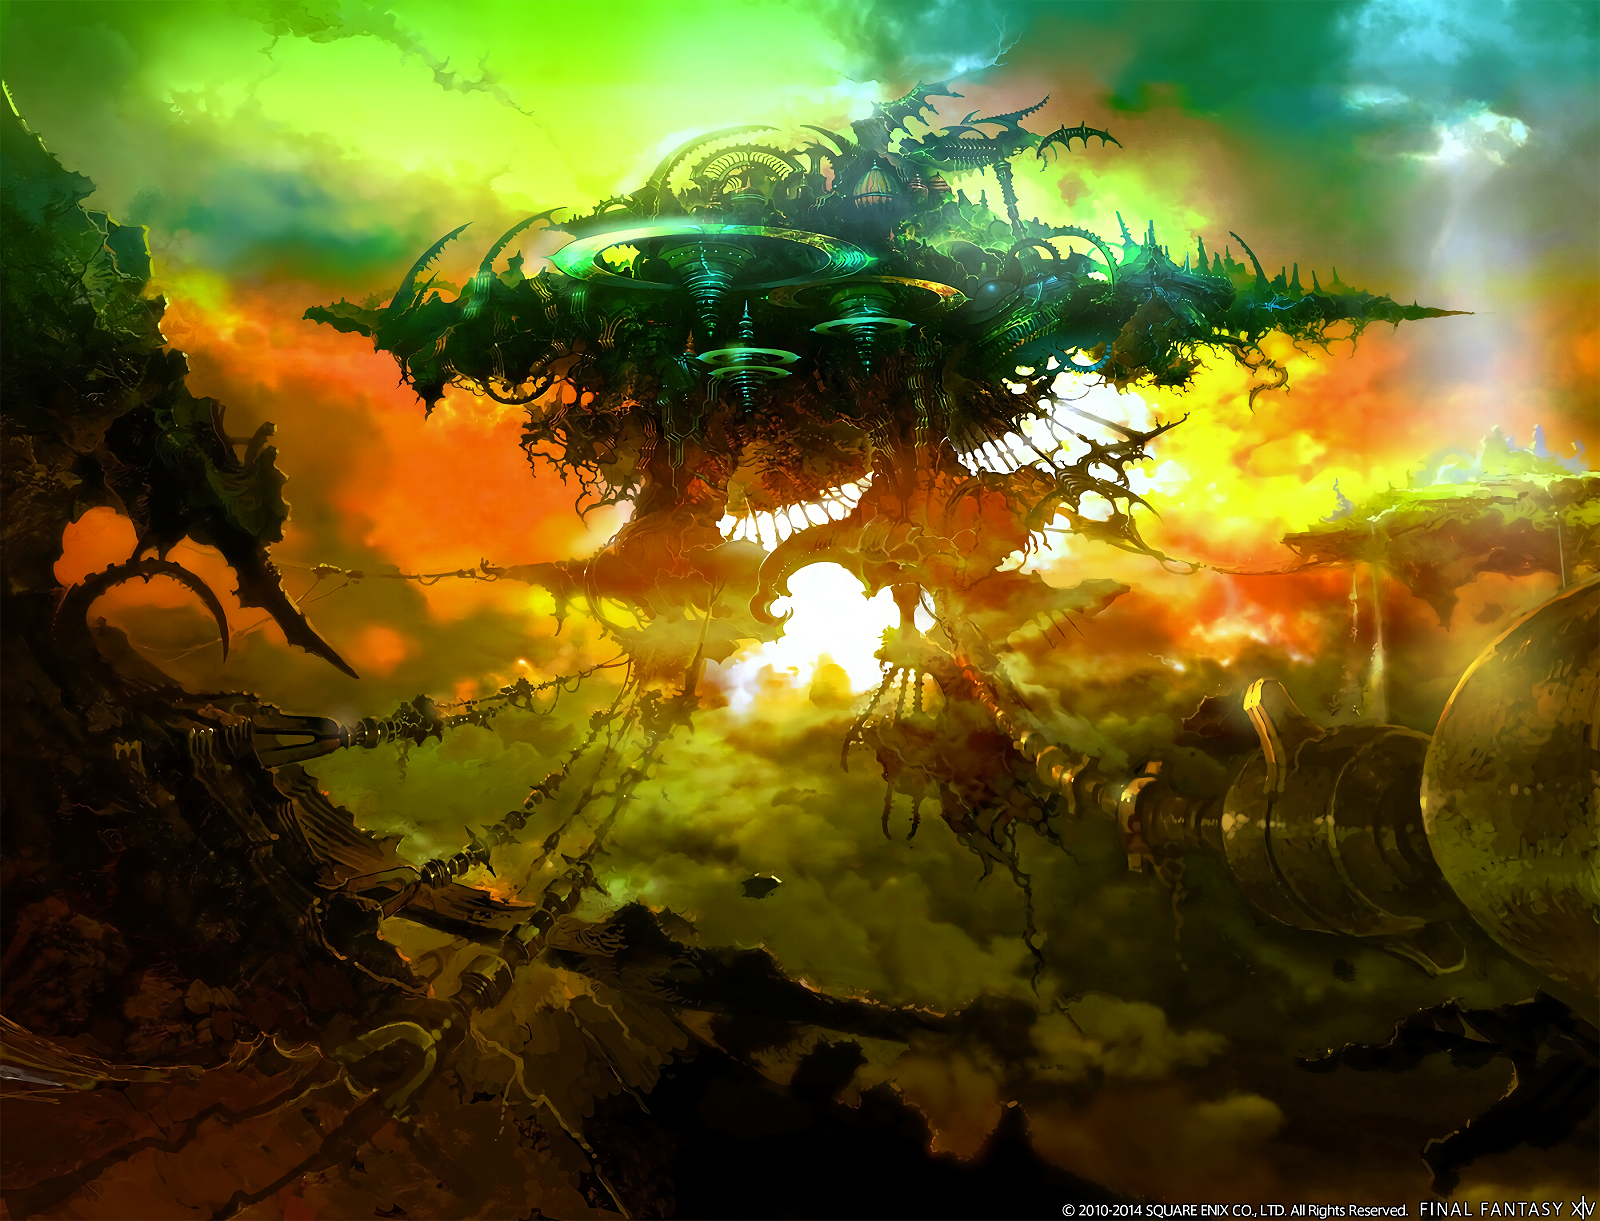 General 1600x1221 Final Fantasy XIV: A Realm Reborn video games video game art fantasy art digital art